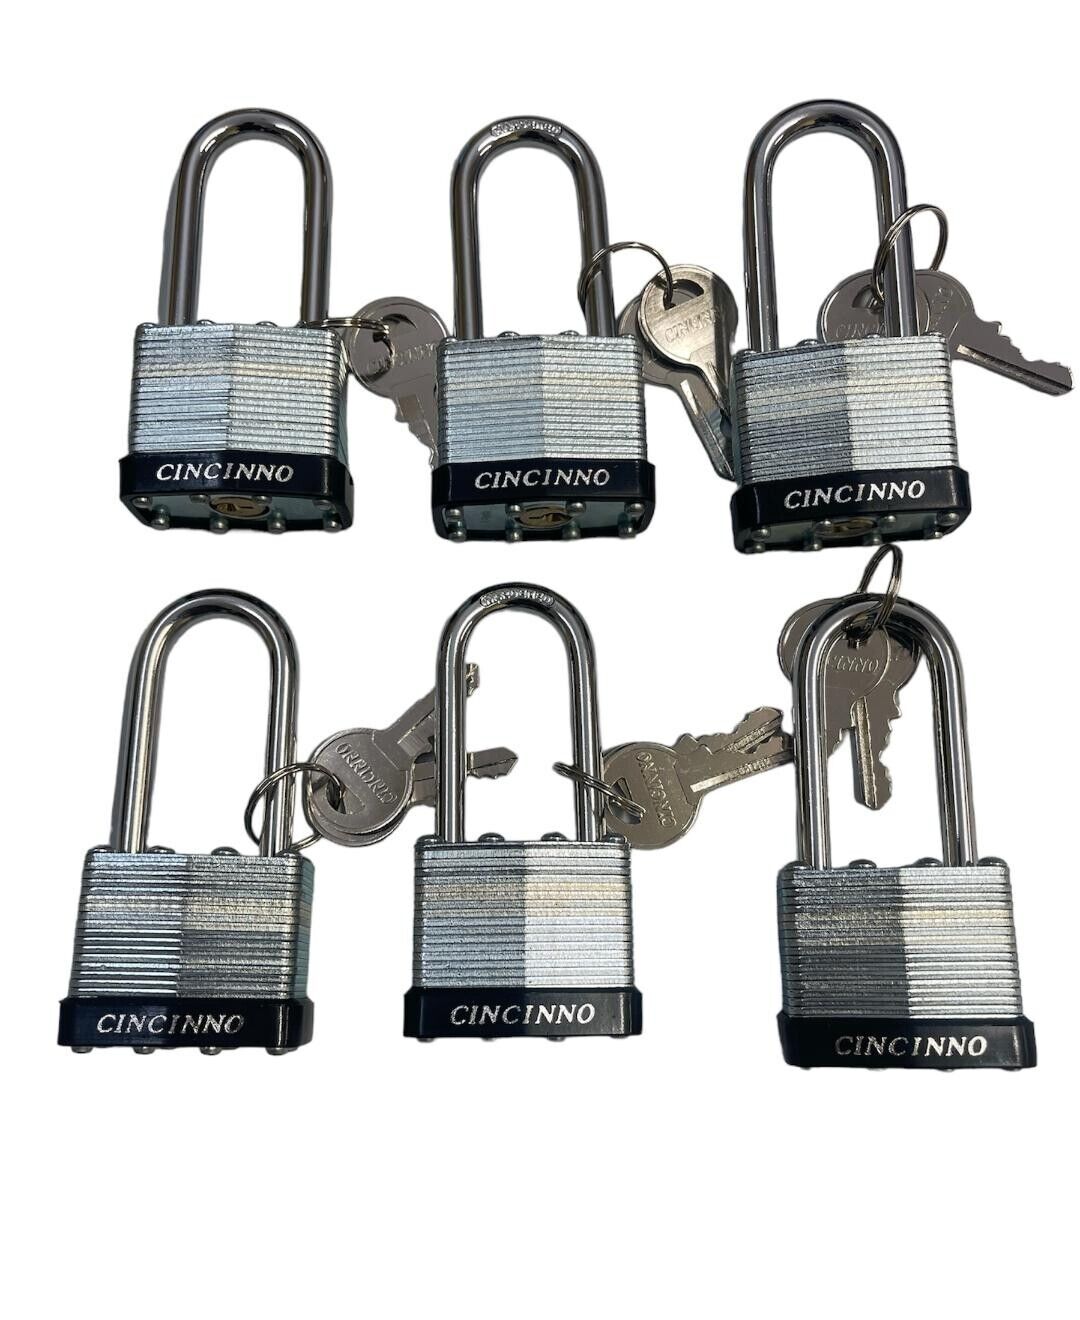 CINCINNO Heavy Duty Padlocks With Keys (6 Pack)